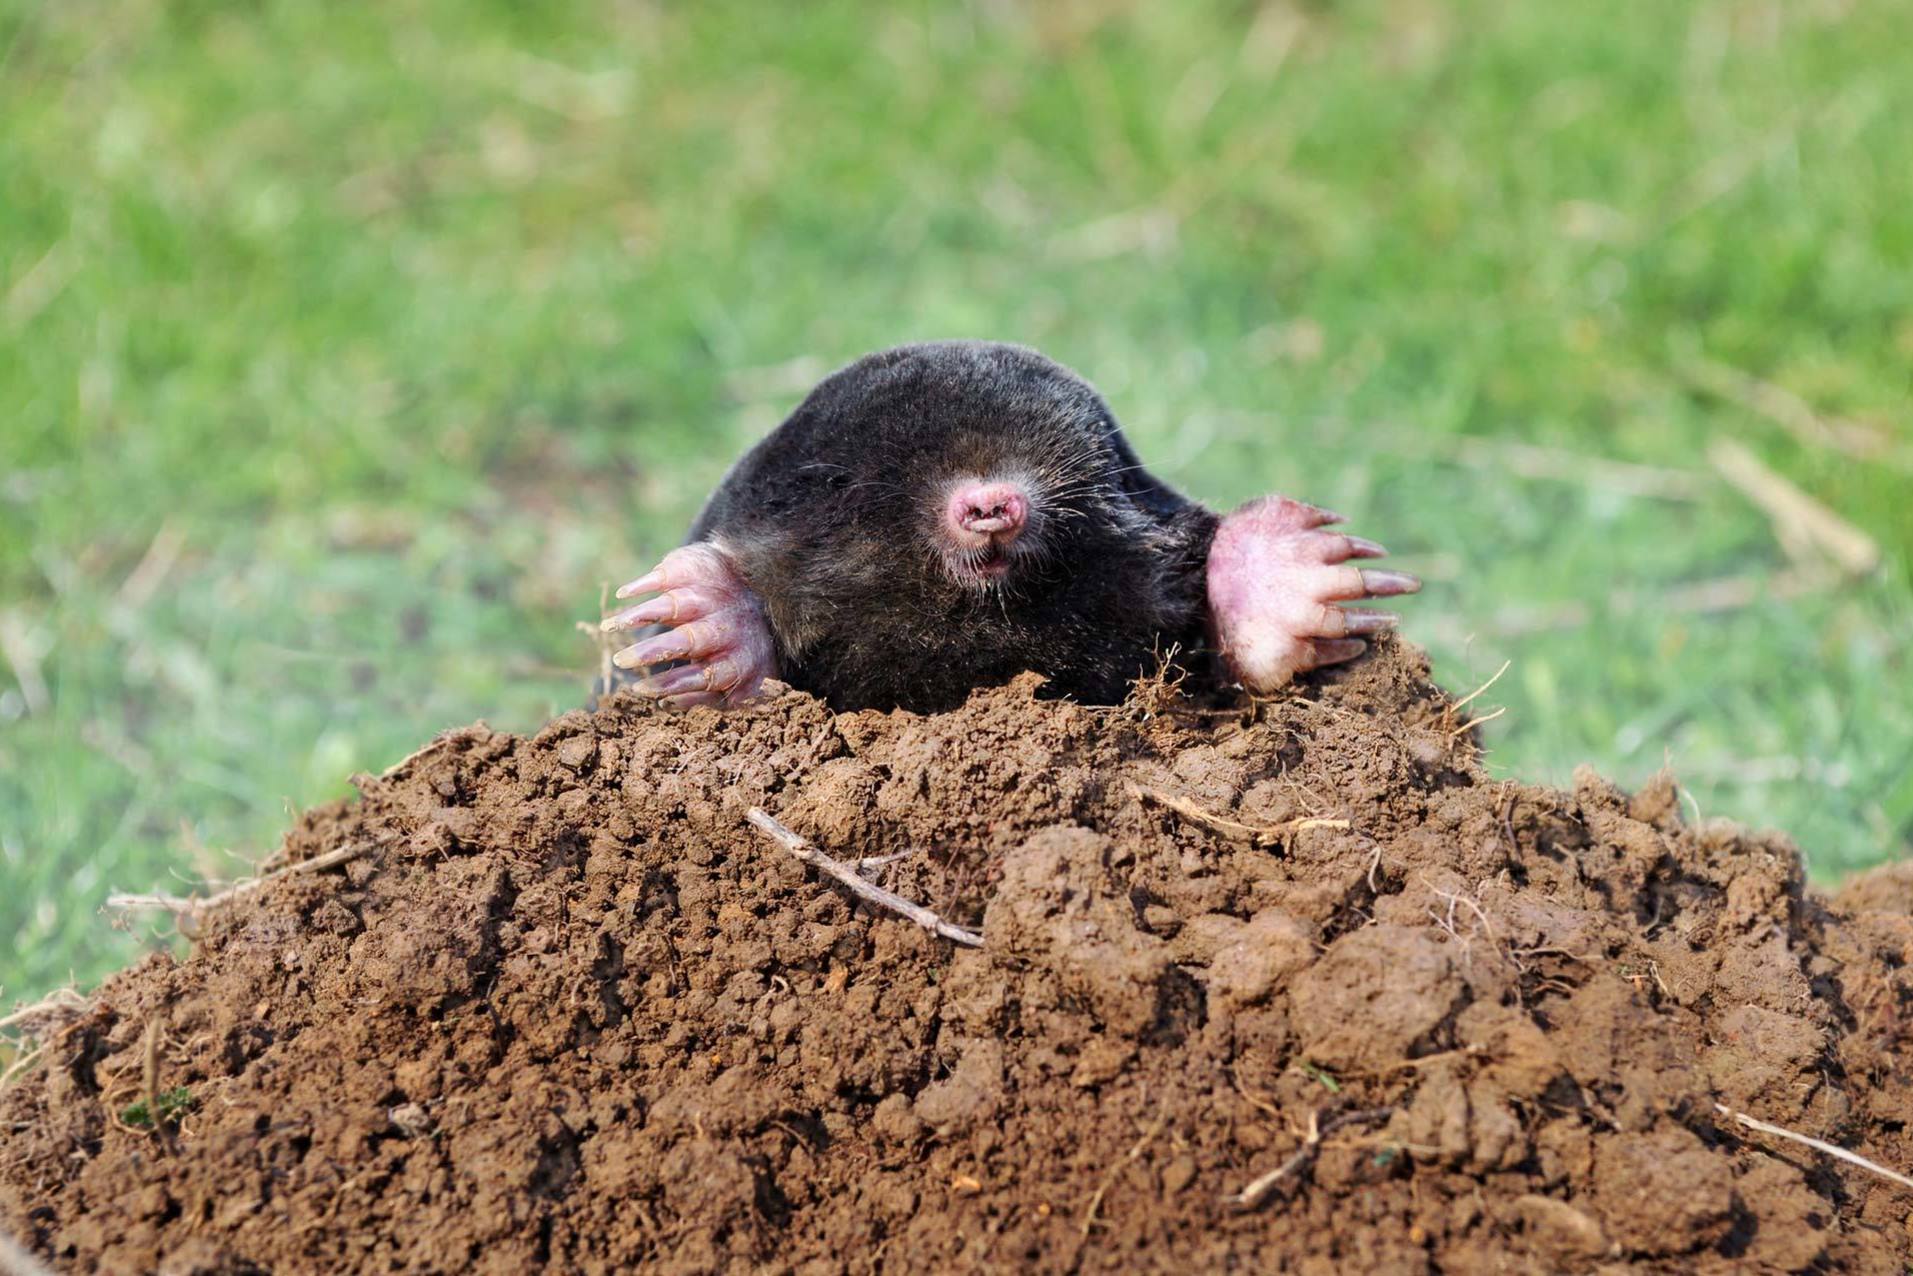 Mole coming out of a mole hill